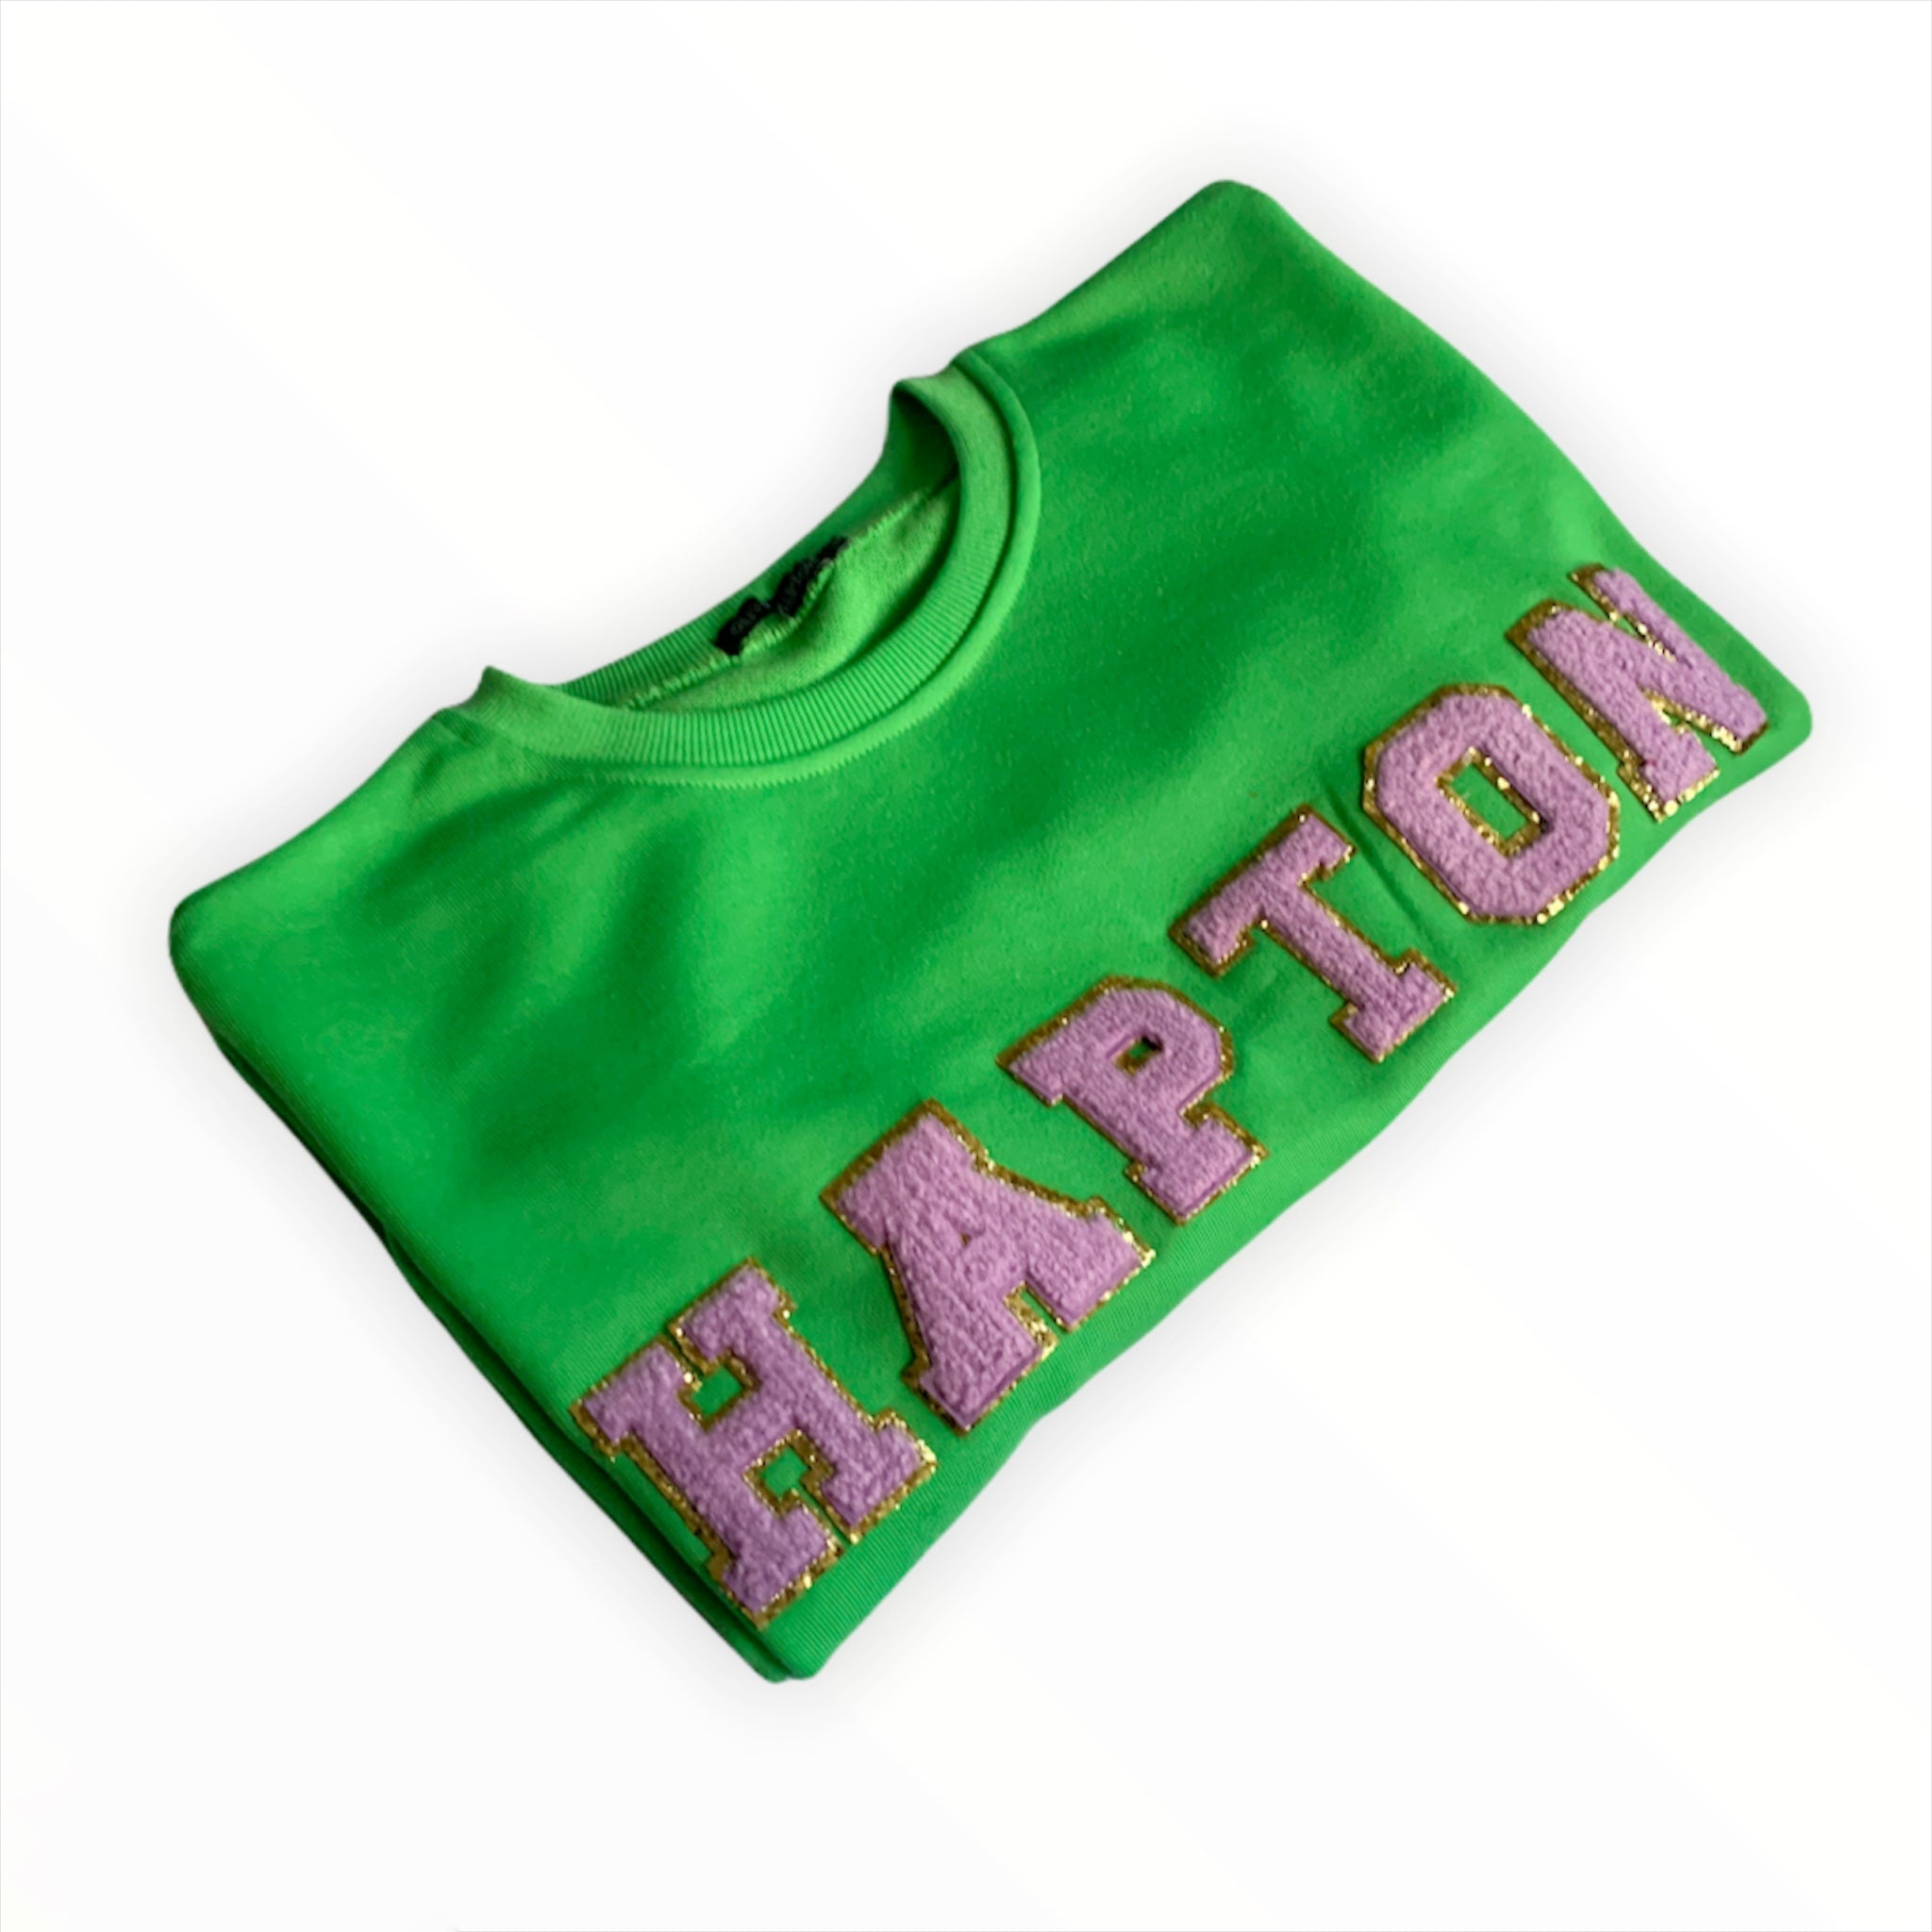 HAPTON sweatshirt - GREEN